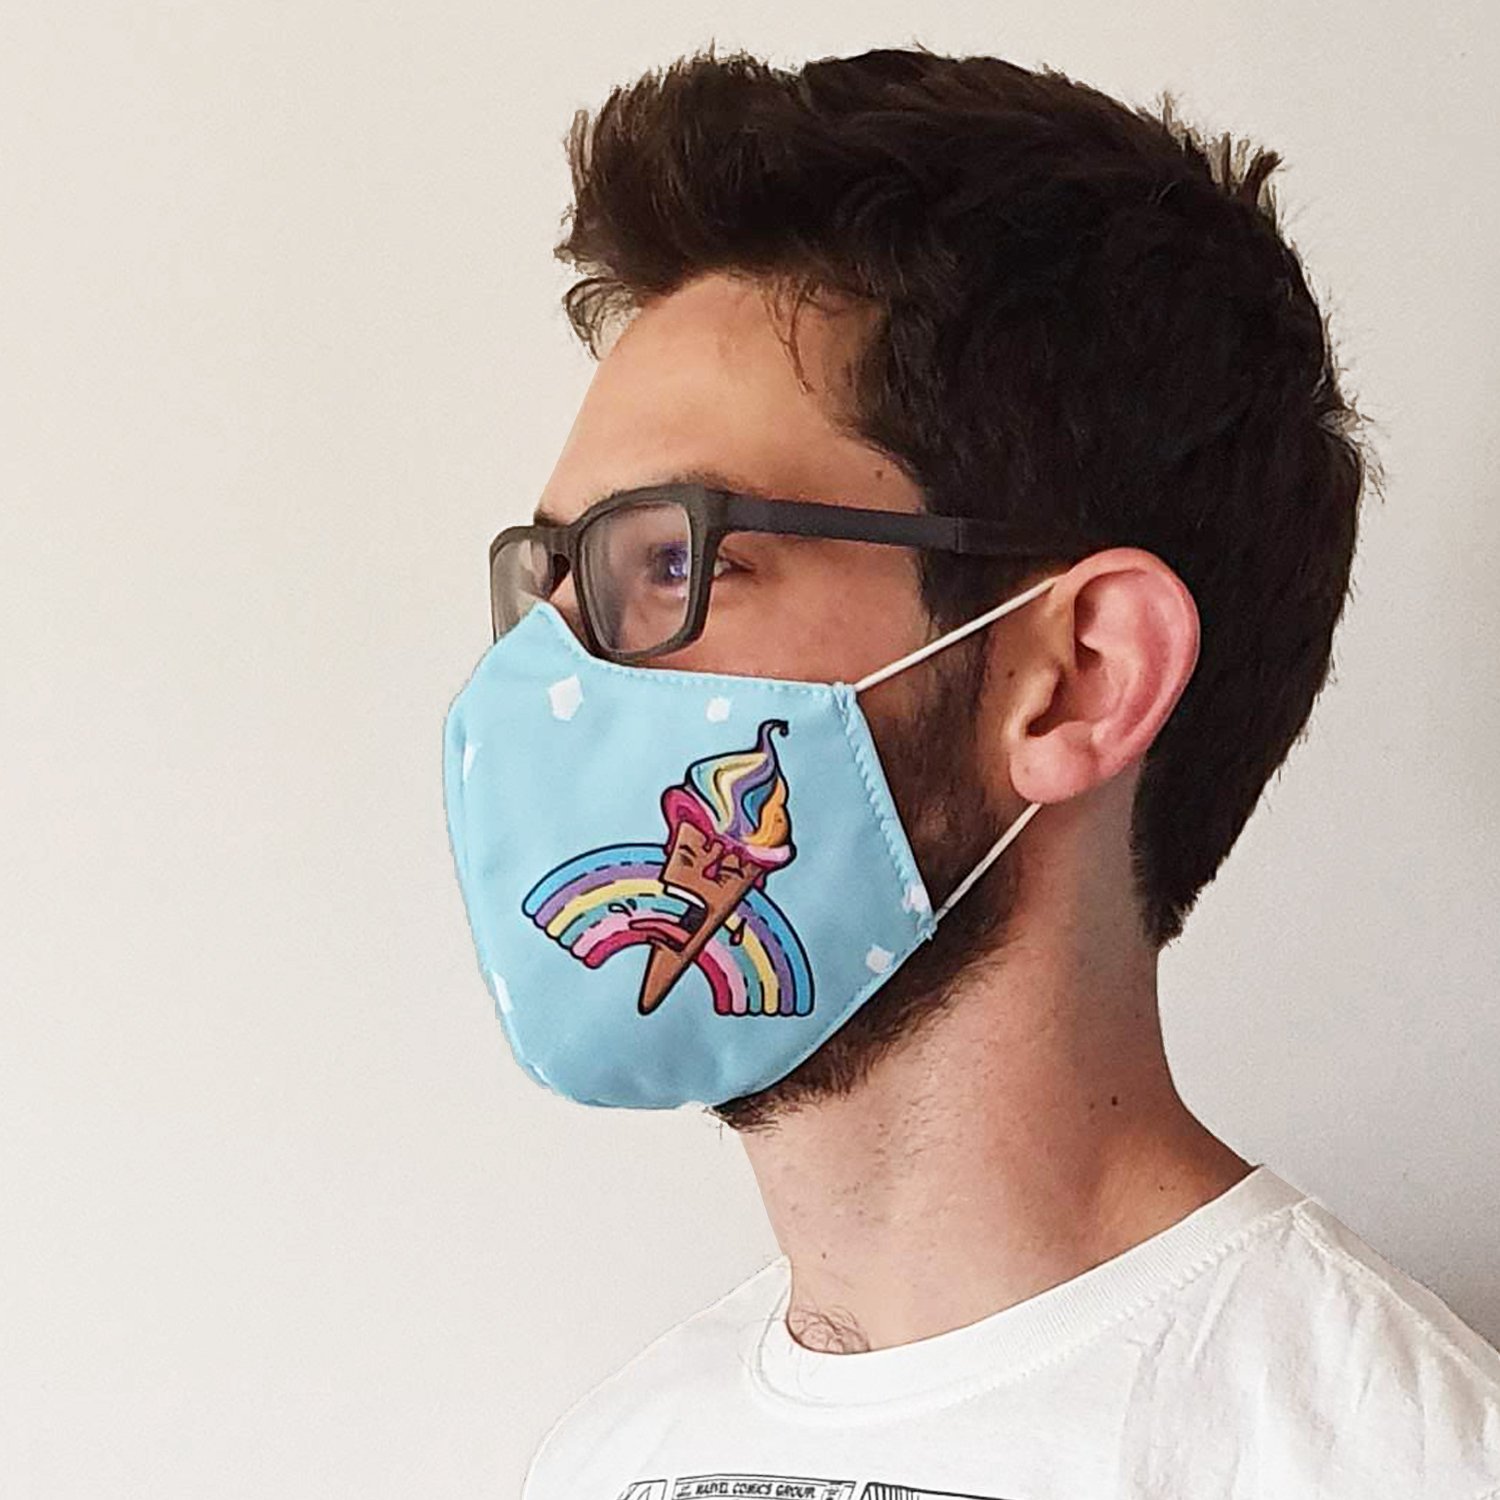 Care & More Artist premium reusable face mask | Face masks | Personal care